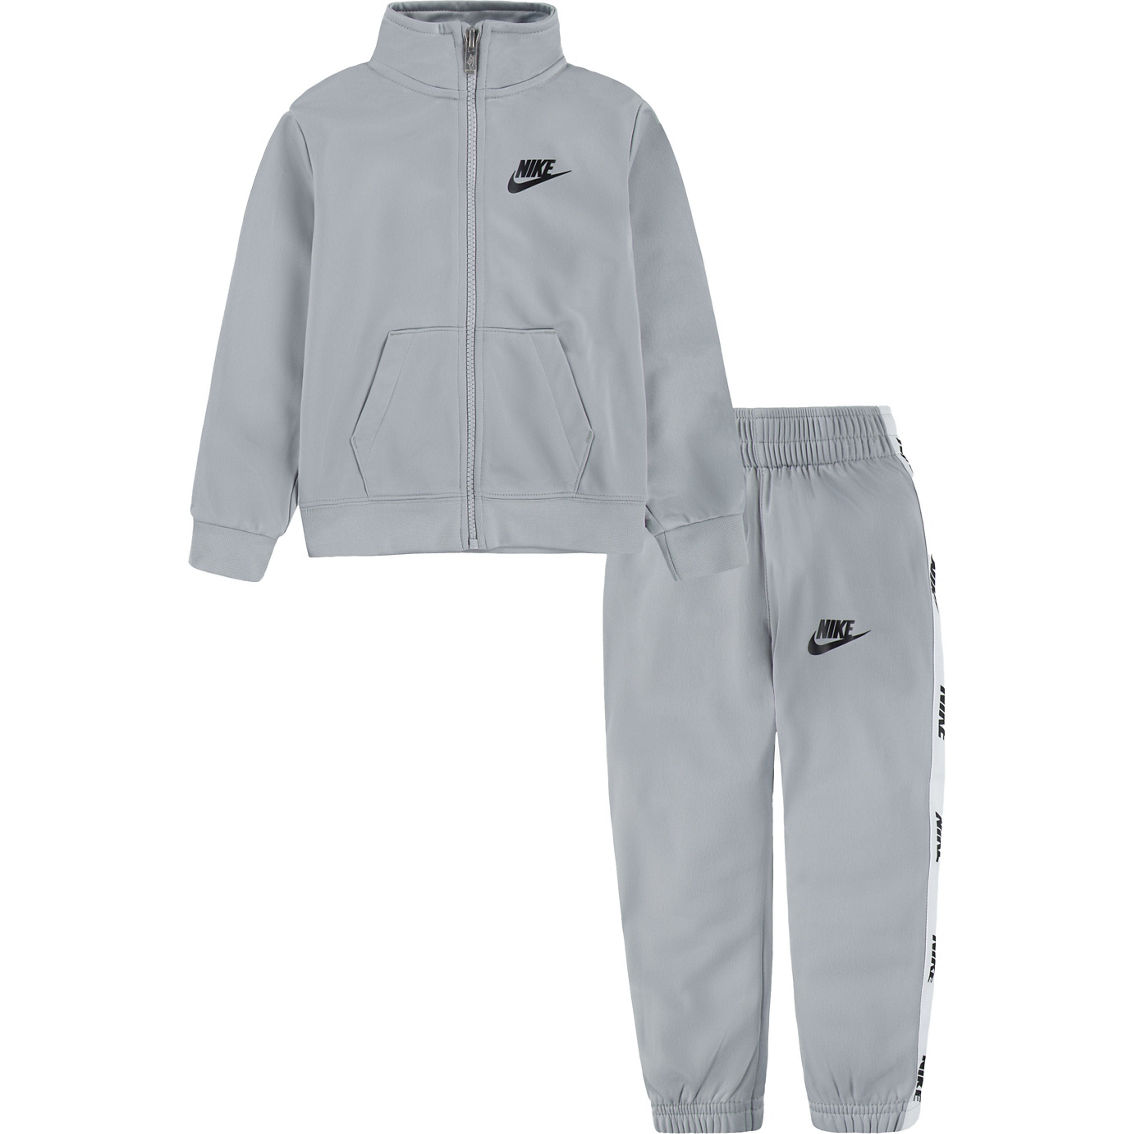 Nike Toddler Boys Tricot Tracksuit Set | Toddler Boys 2t-5t | Clothing ...